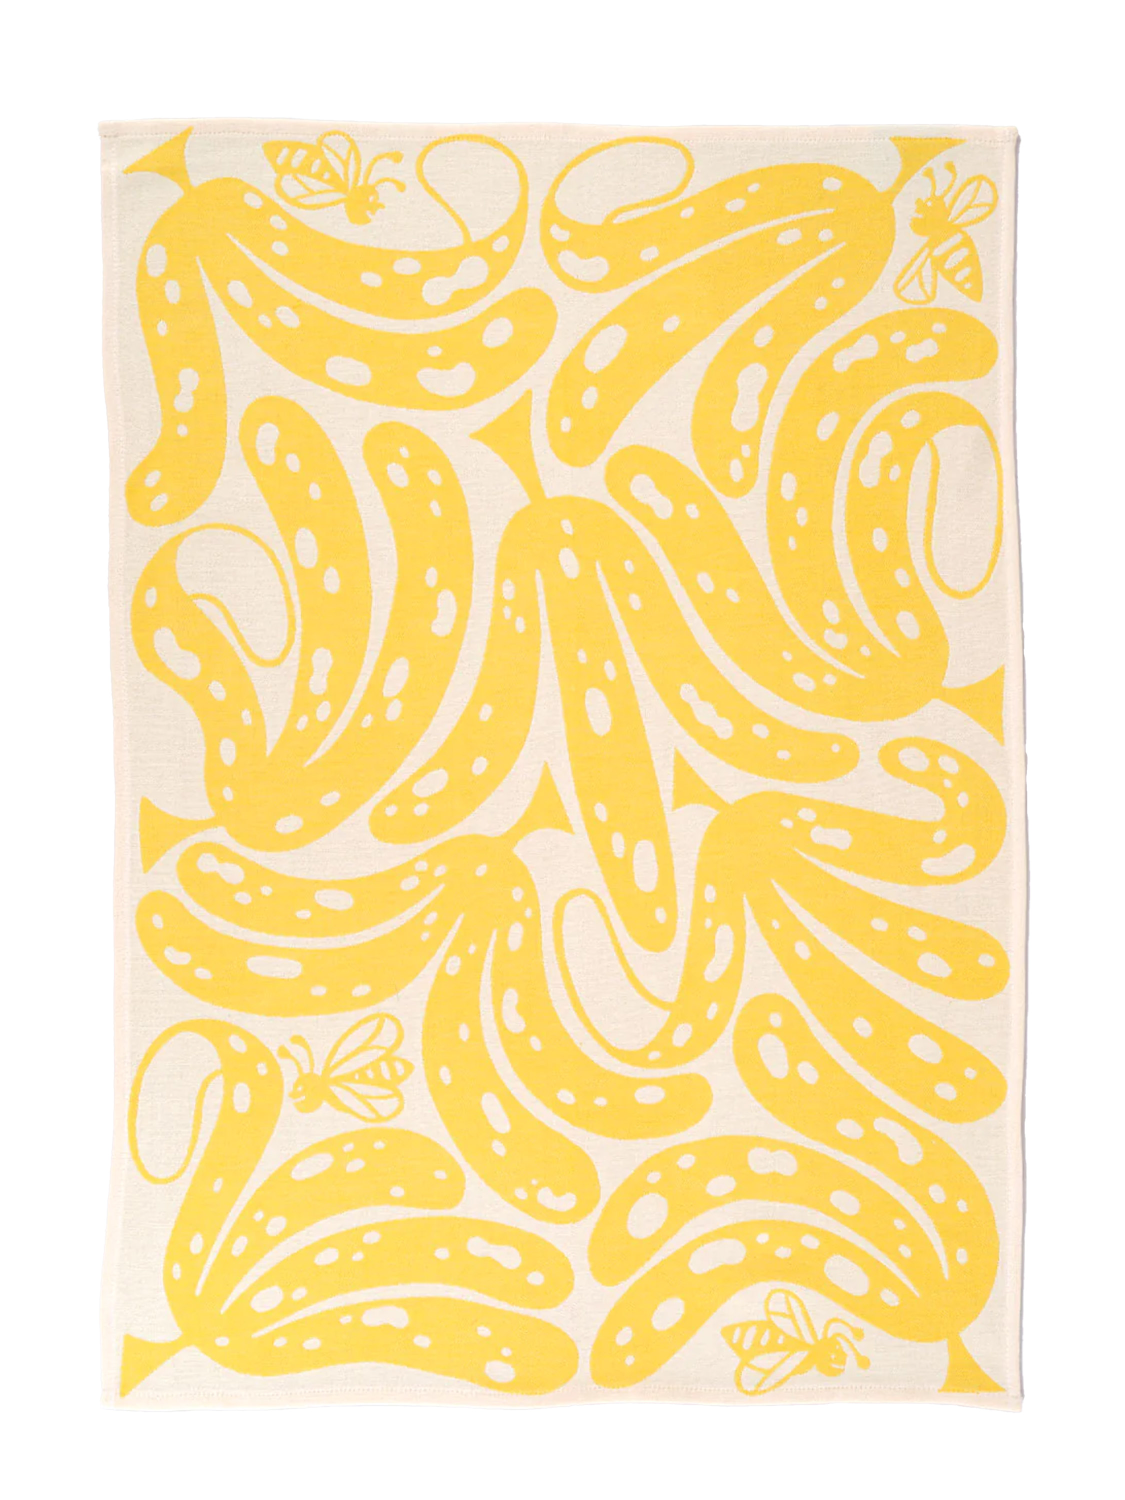 Yellow banana illustrated tea towel by Cari Vander Yacht for Wrap Magazine